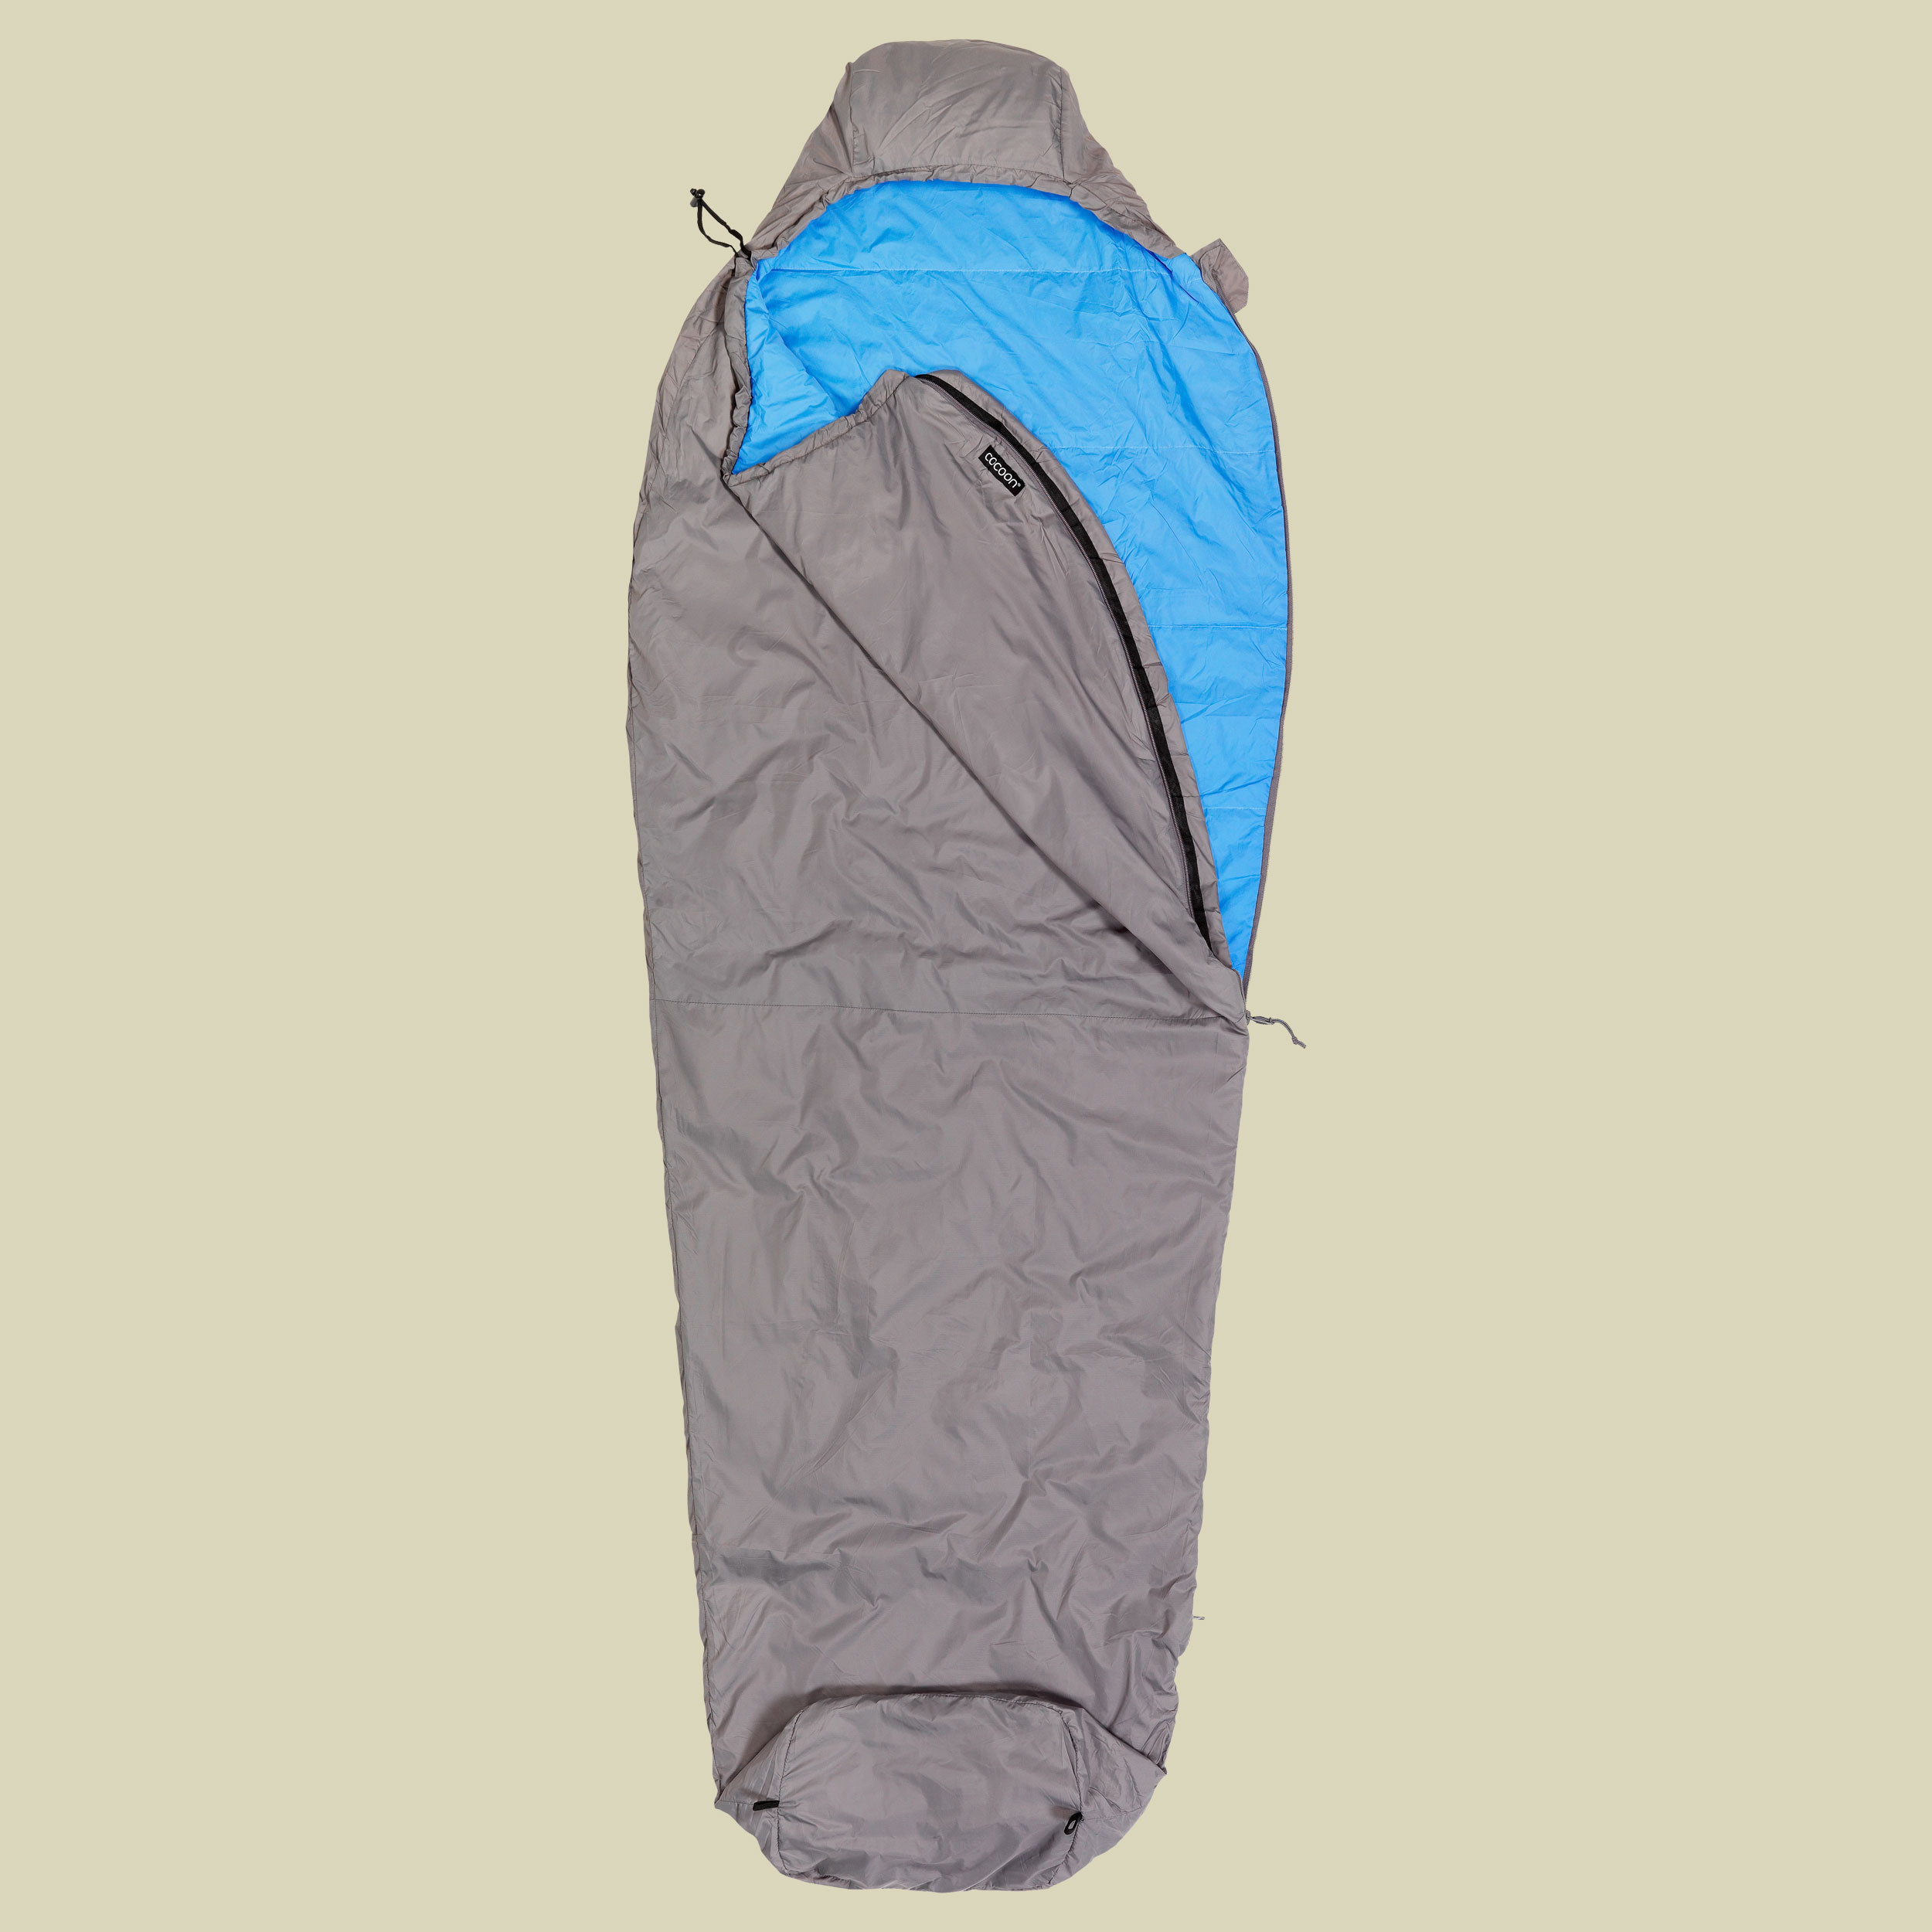 Mountain Wanderer bis Körpergröße 185 cm (regular) Farbe volcano grey/light blue